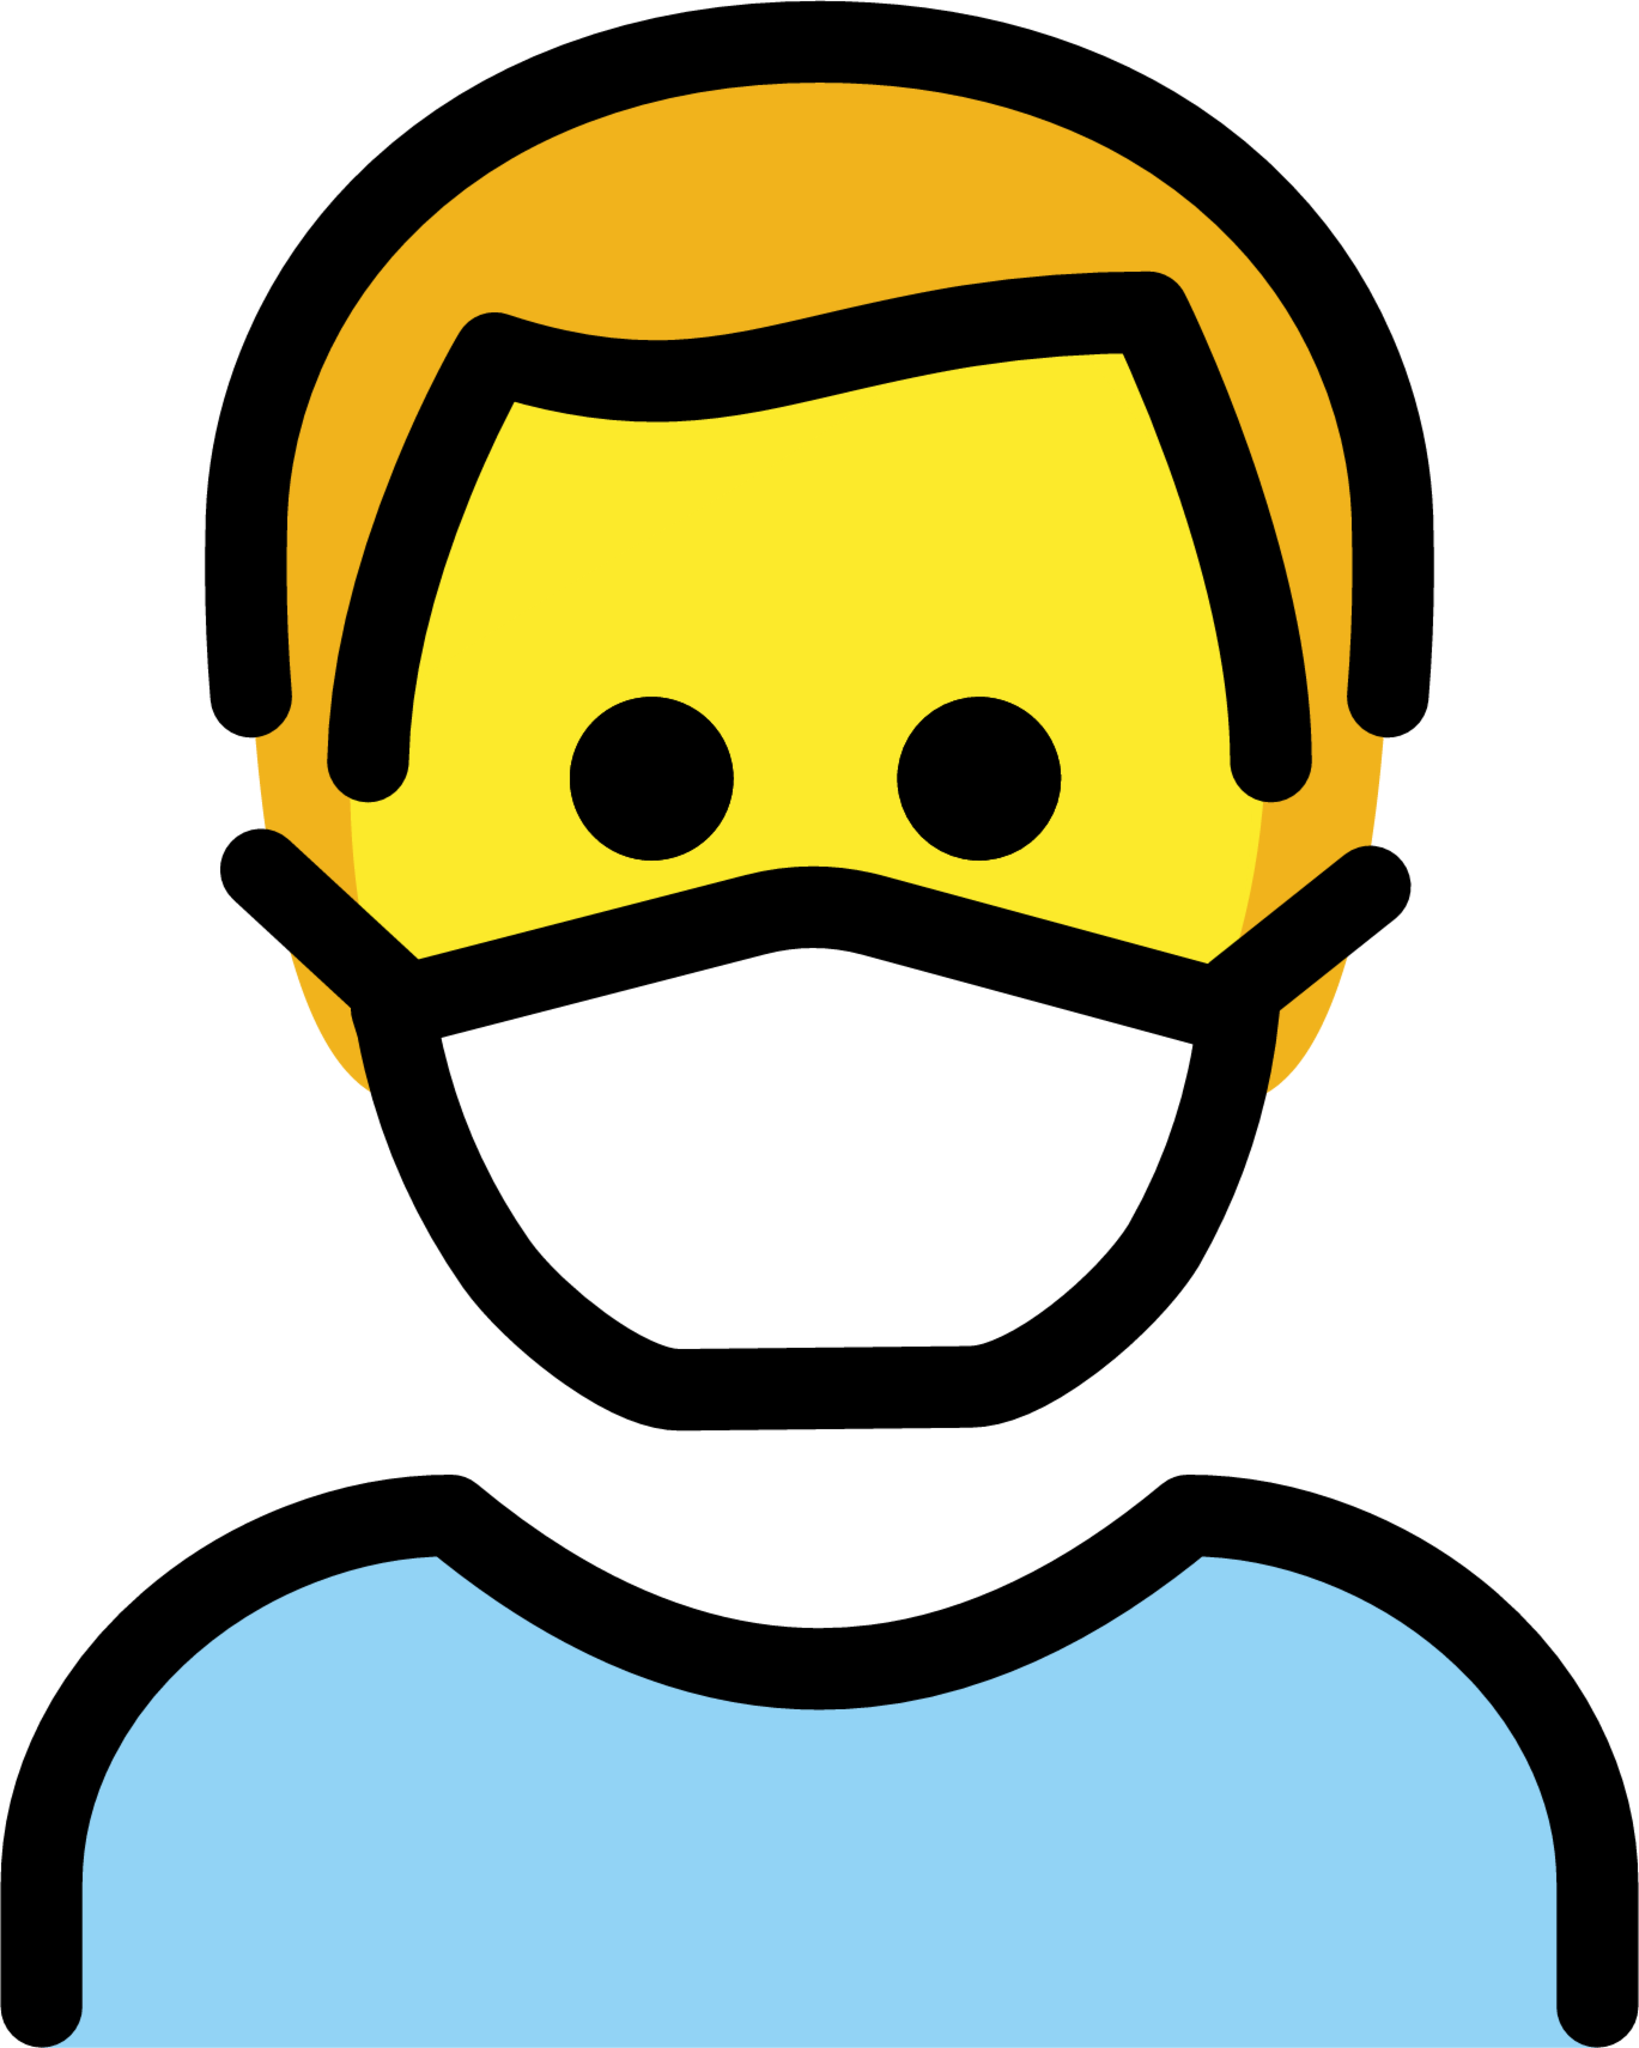 man with medical mask emoji